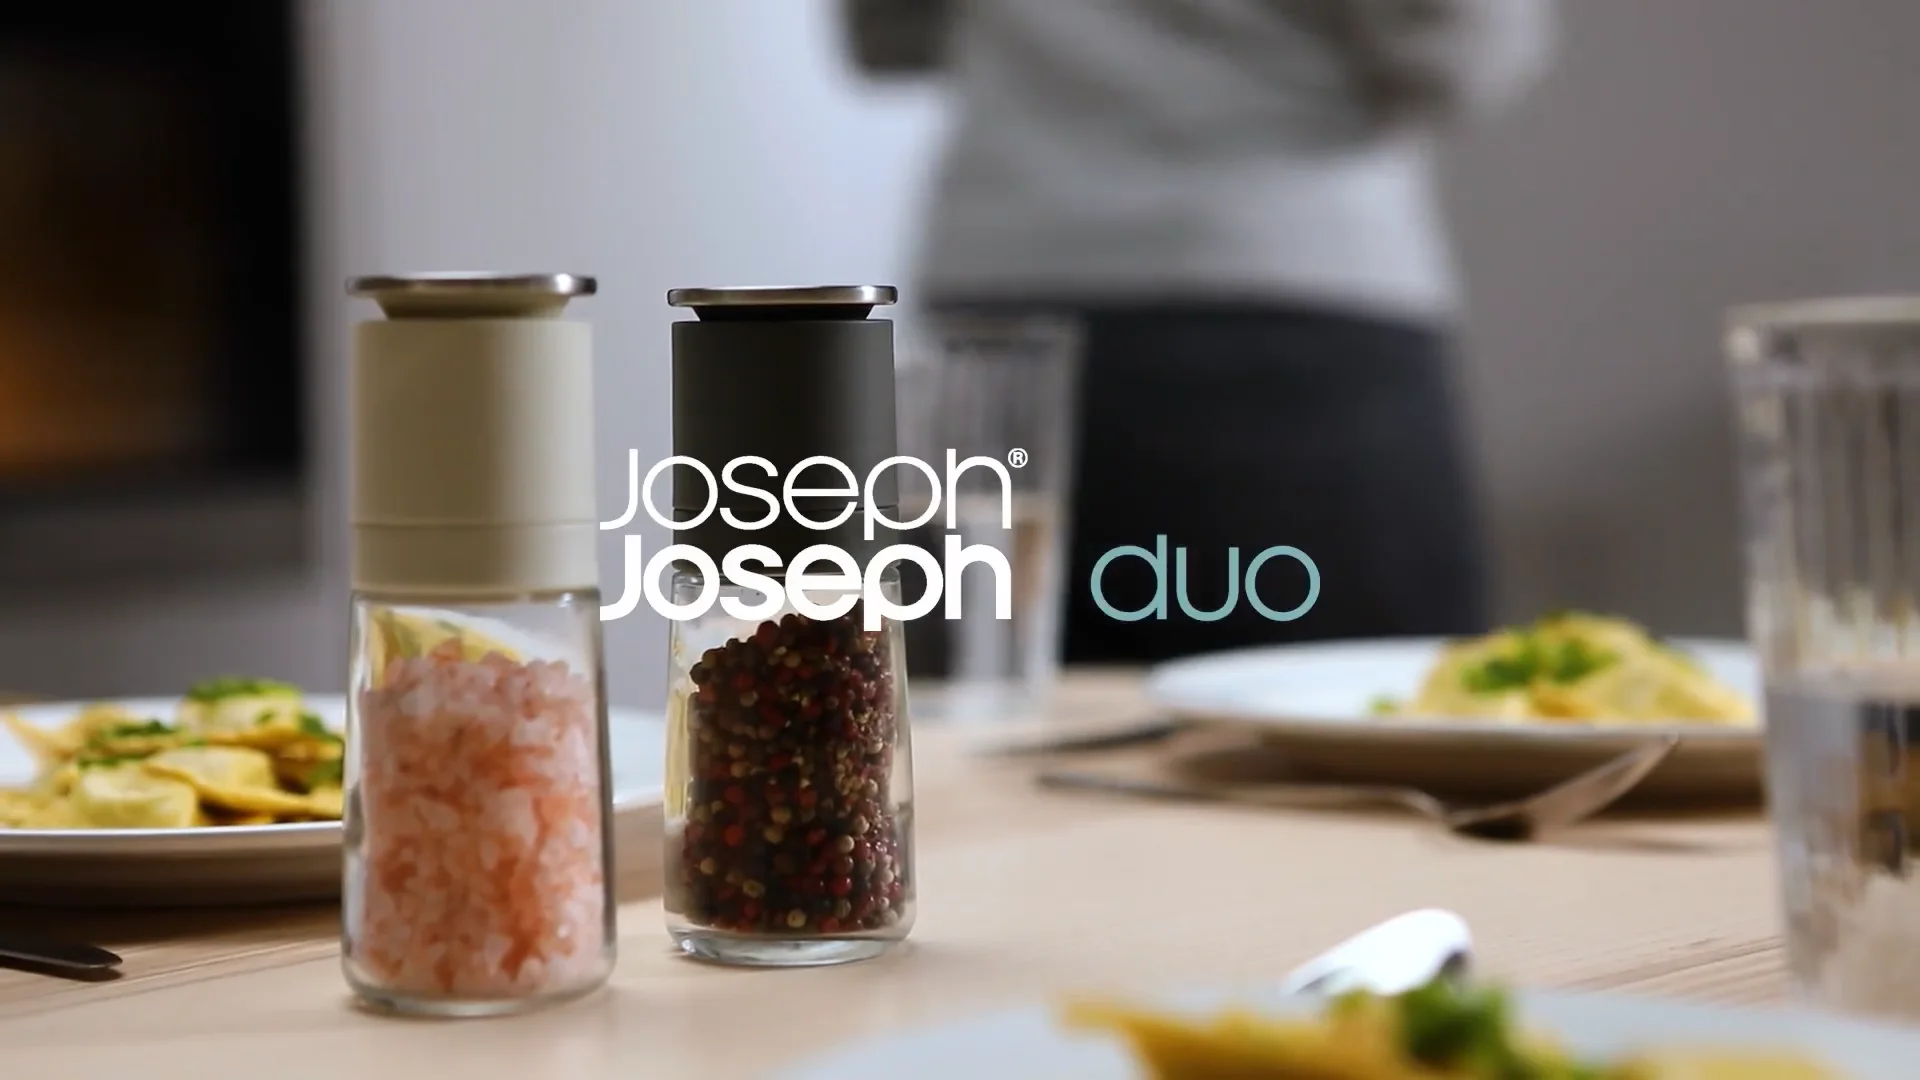 Joseph Joseph DUO 20198 on Salt & Vimeo Set Pepper